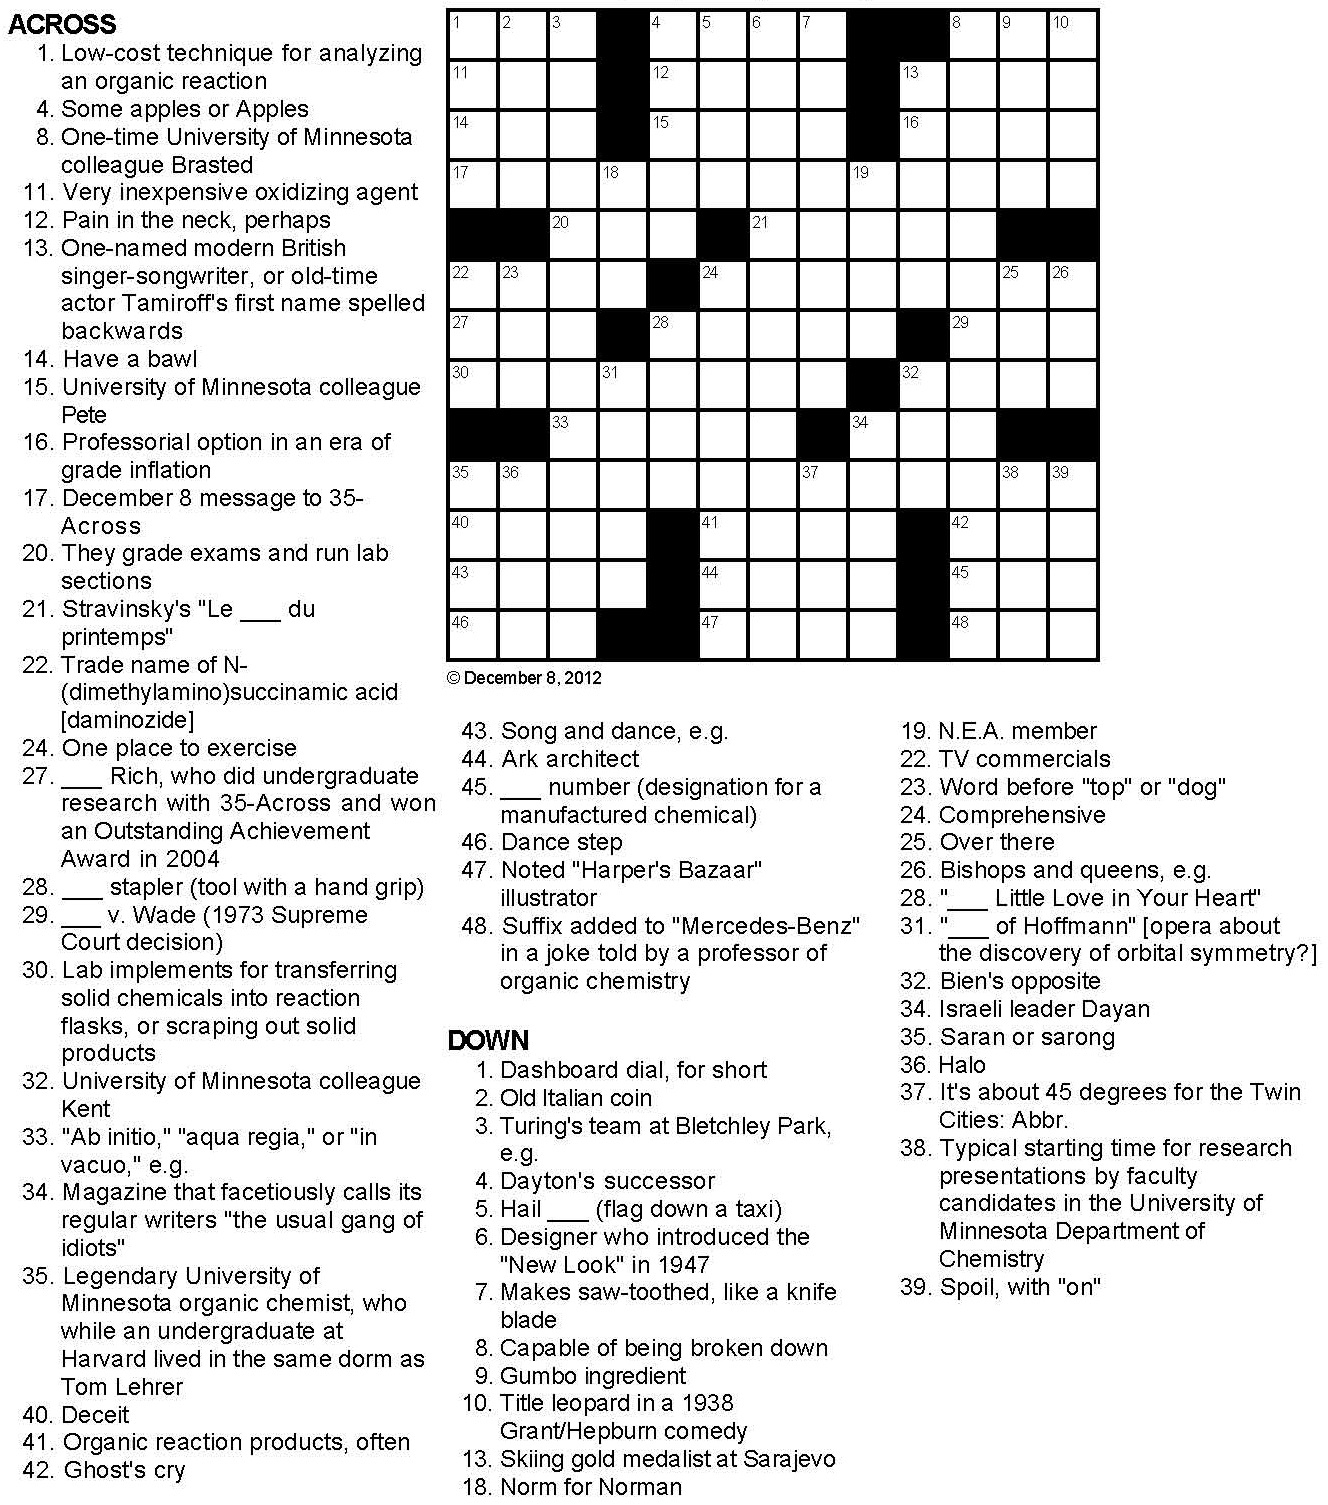 Easy Celebrity Crossword Puzzles Printable - Printable Puzzles Online